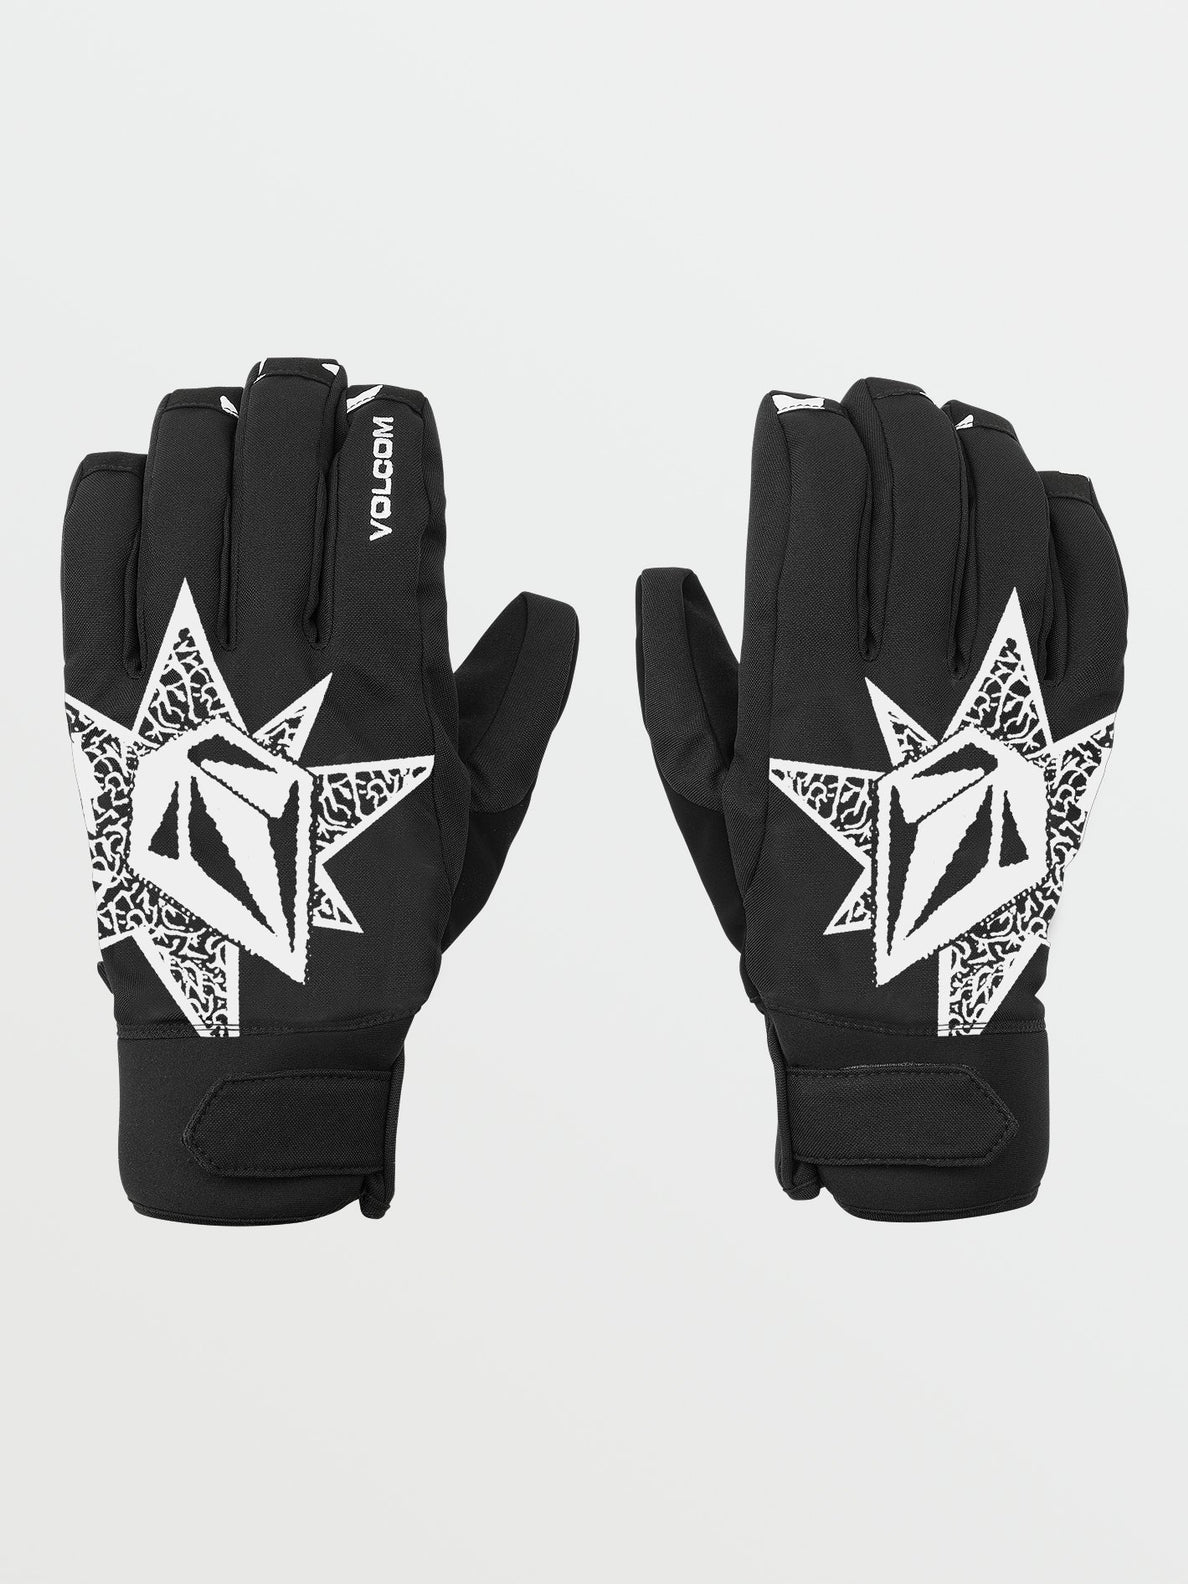 Vco Nyle Glove - BLACK (J6852205_BLK) [F]